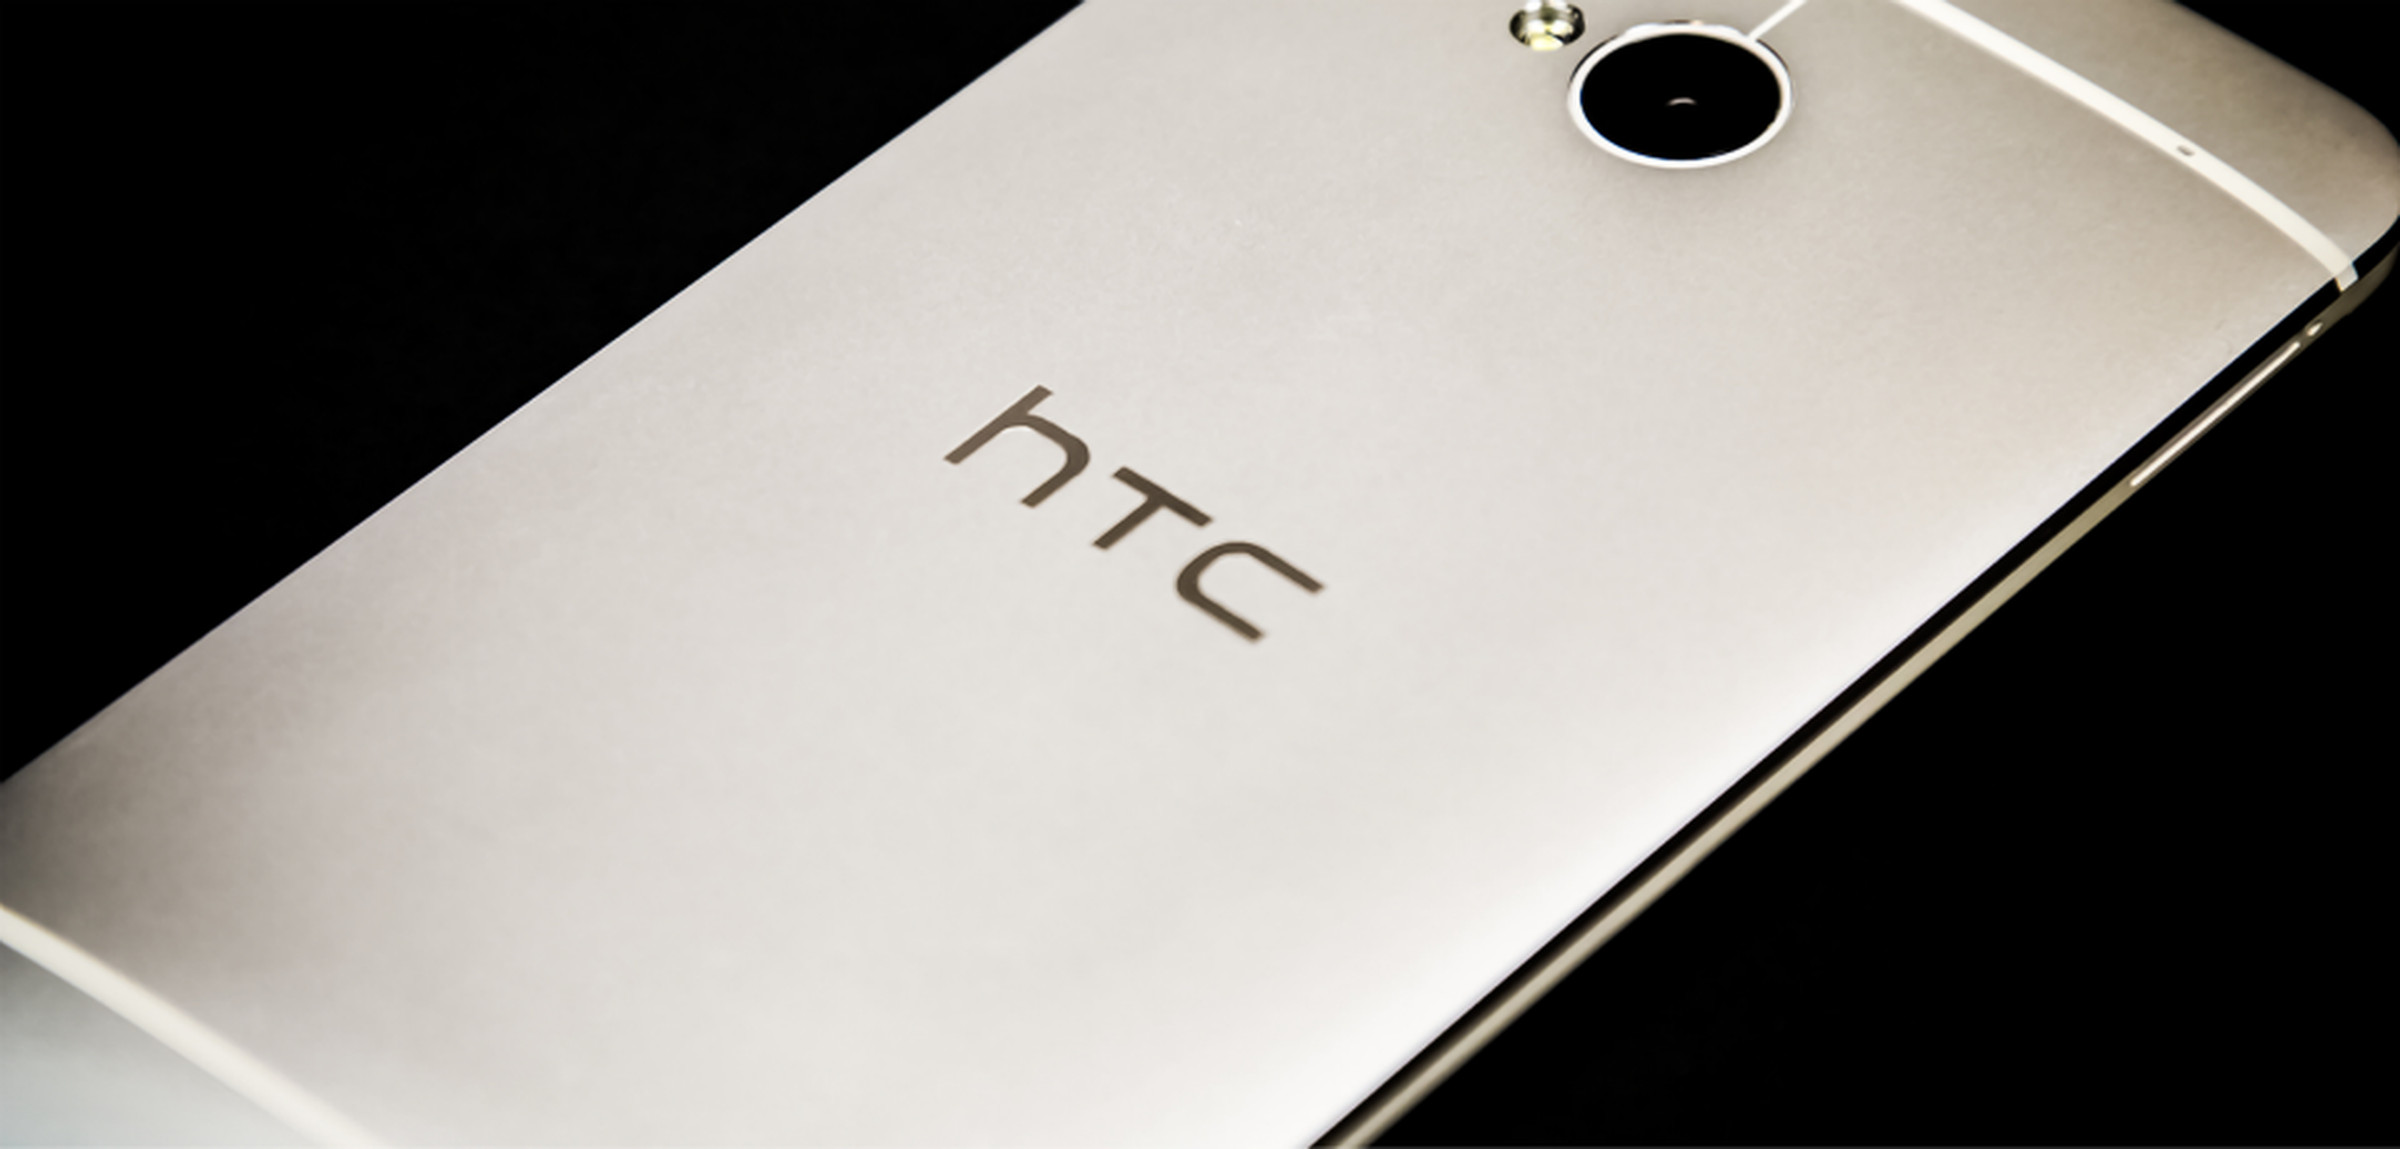 HTC One press photos